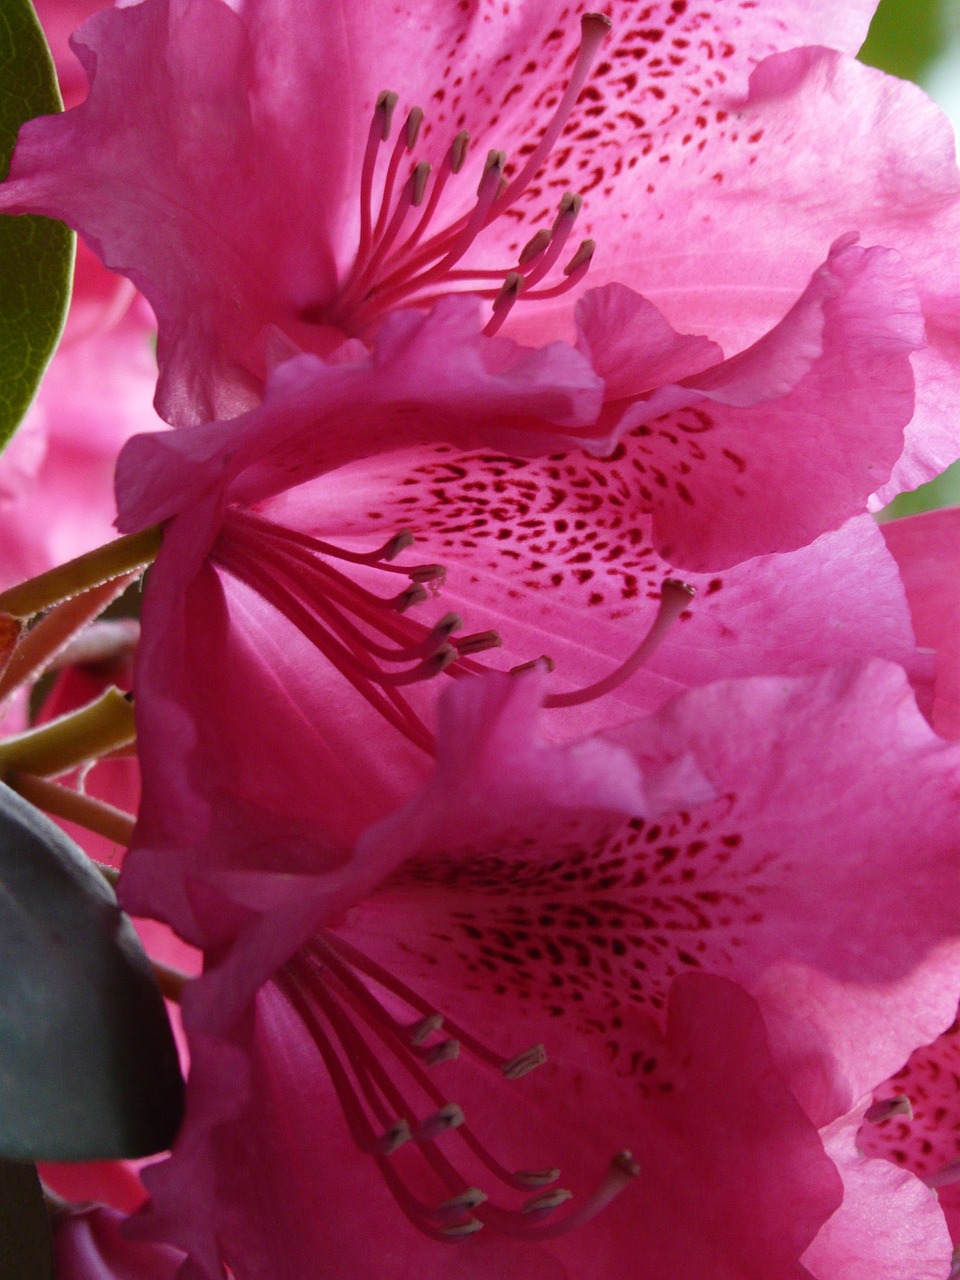 azalea rhododendron flowers free photo